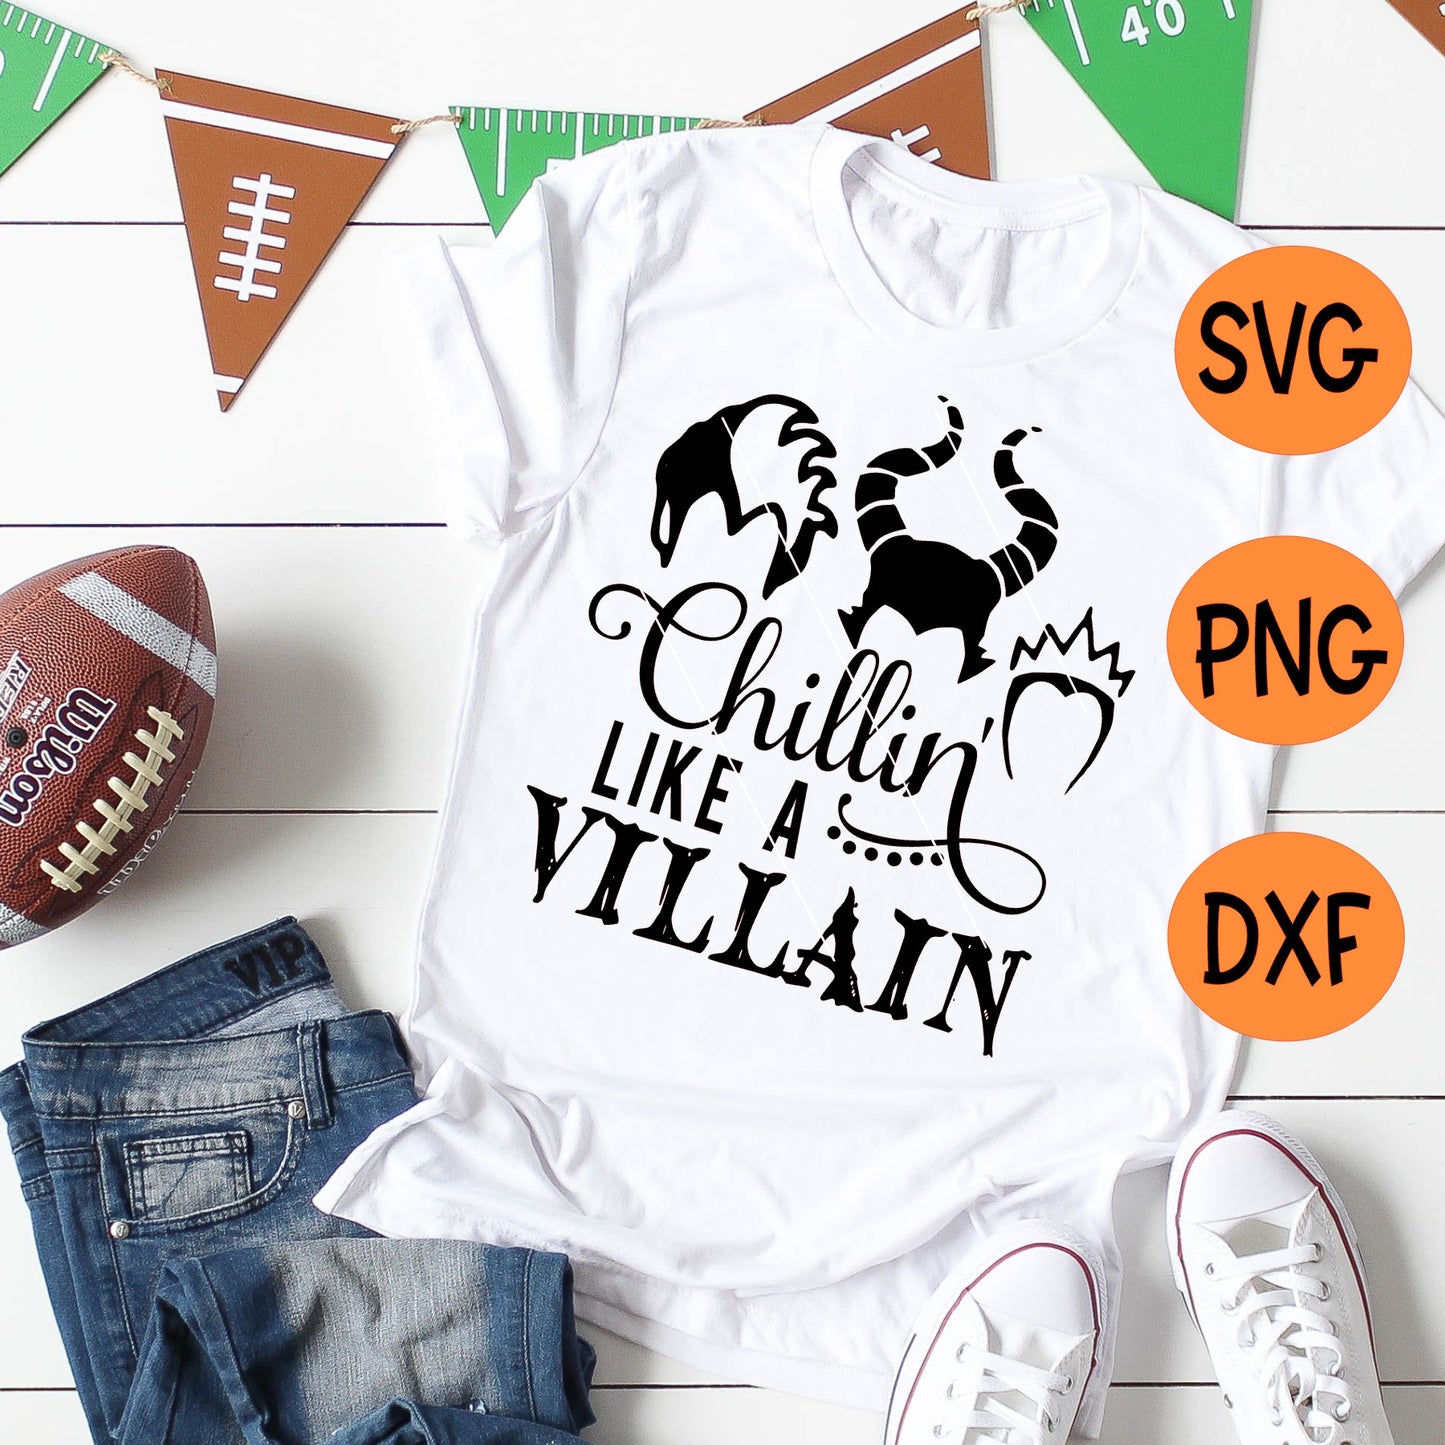 Halloween SVG - Chillin like a Villian Halloween design